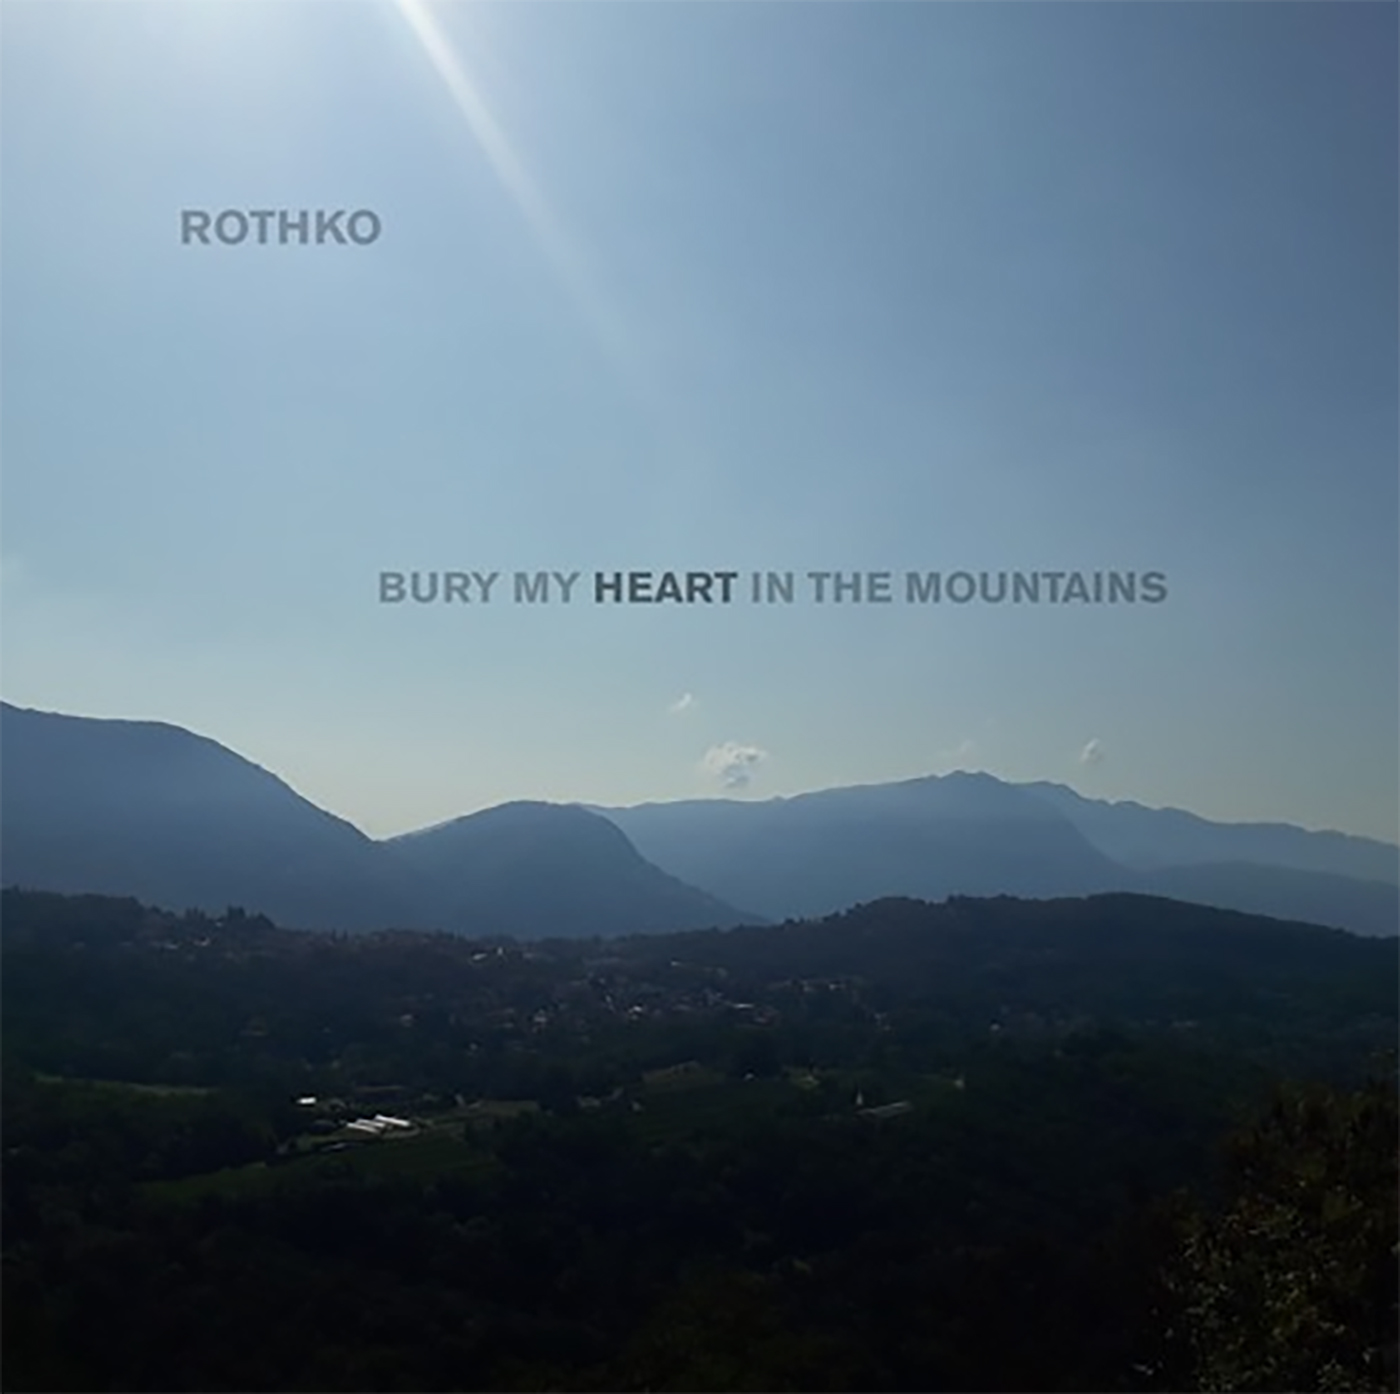 ROTHKO – BURY MY HEART IN THE MOUNTAIN